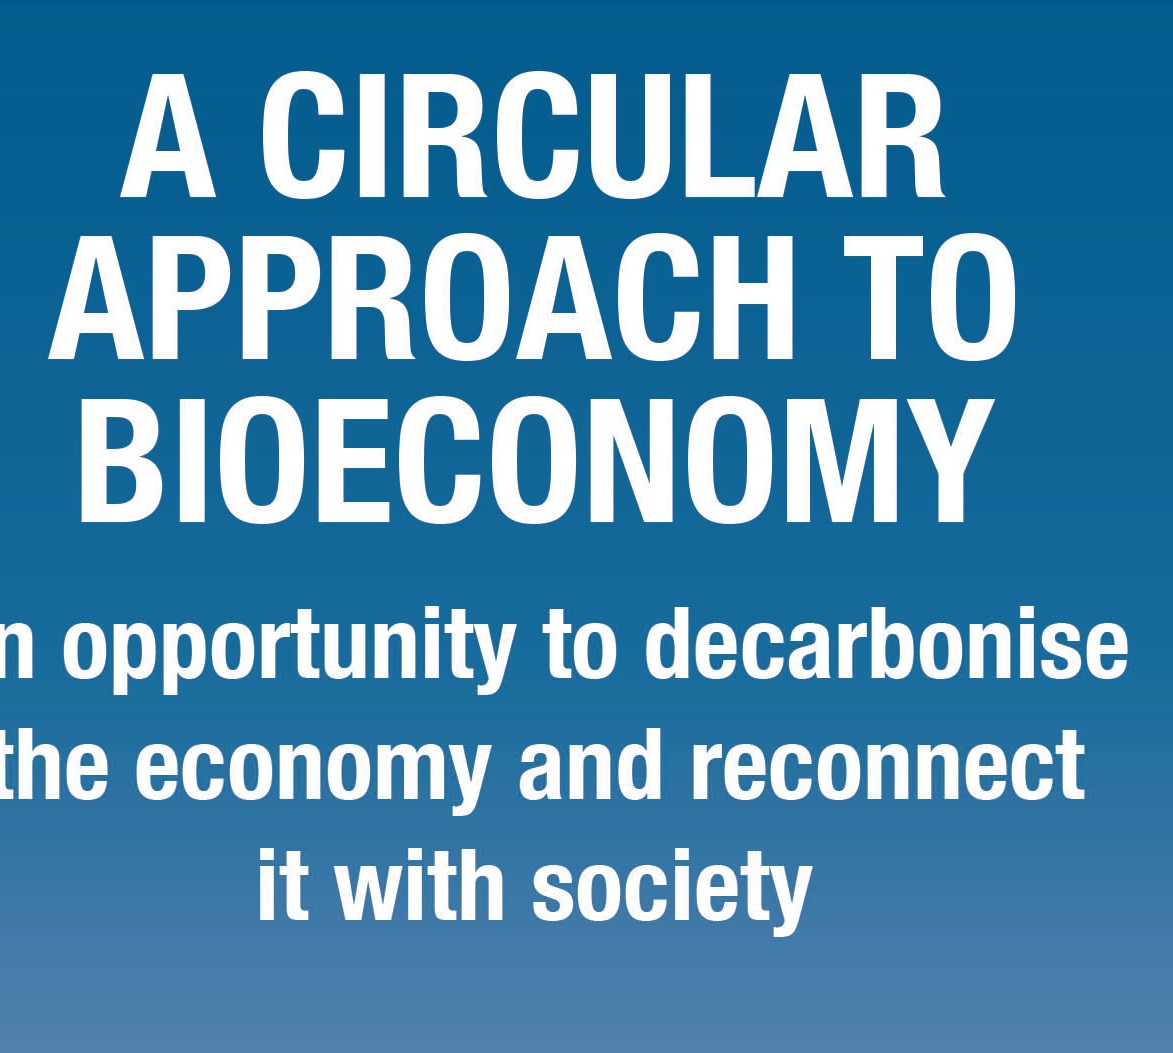 Circular bioeconomy 